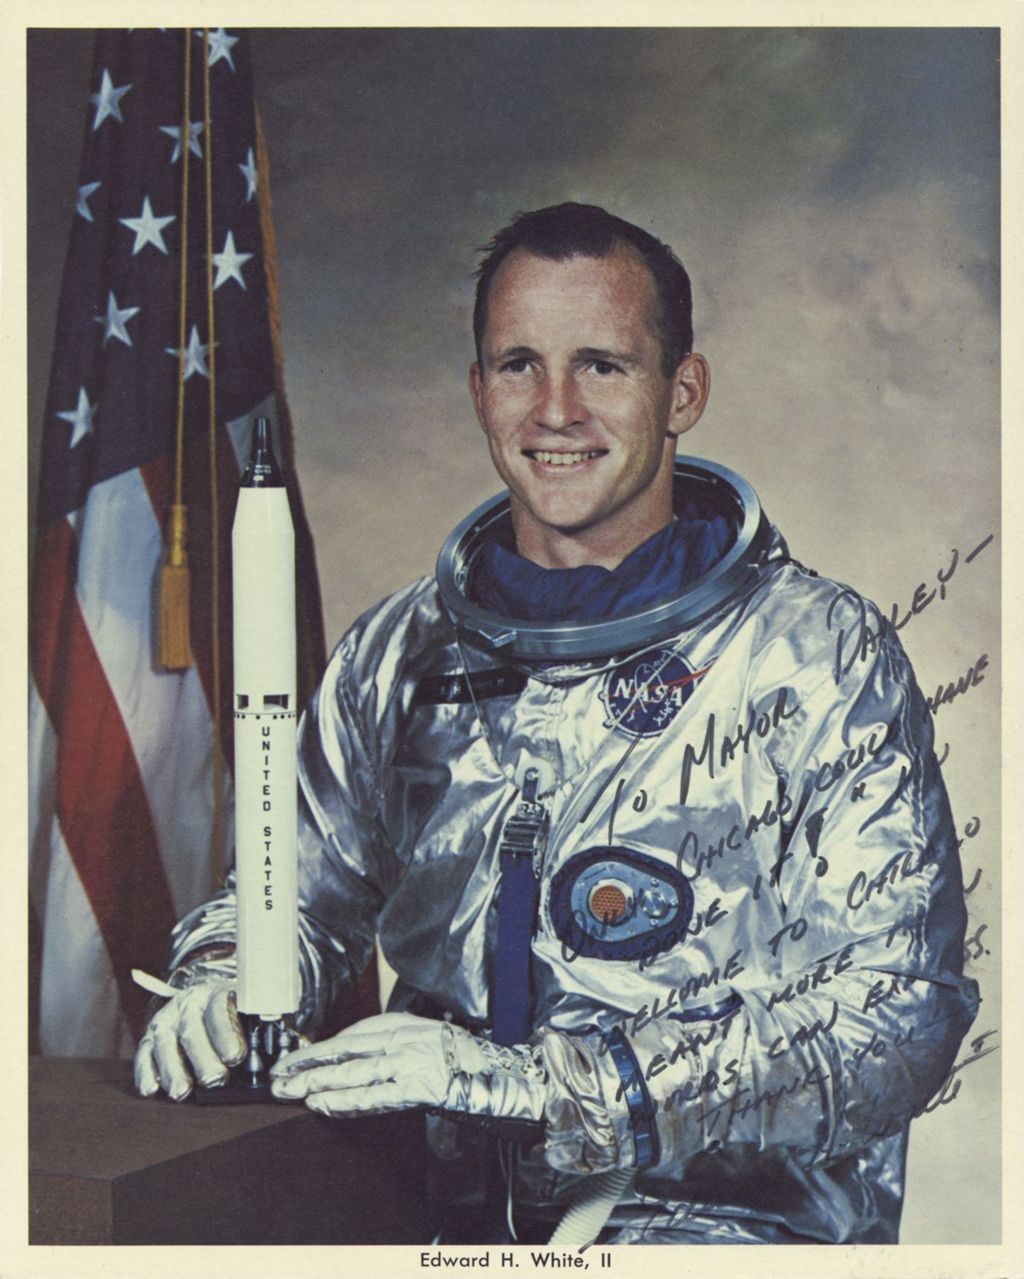 Miniature of Astronaut Edward H. White II